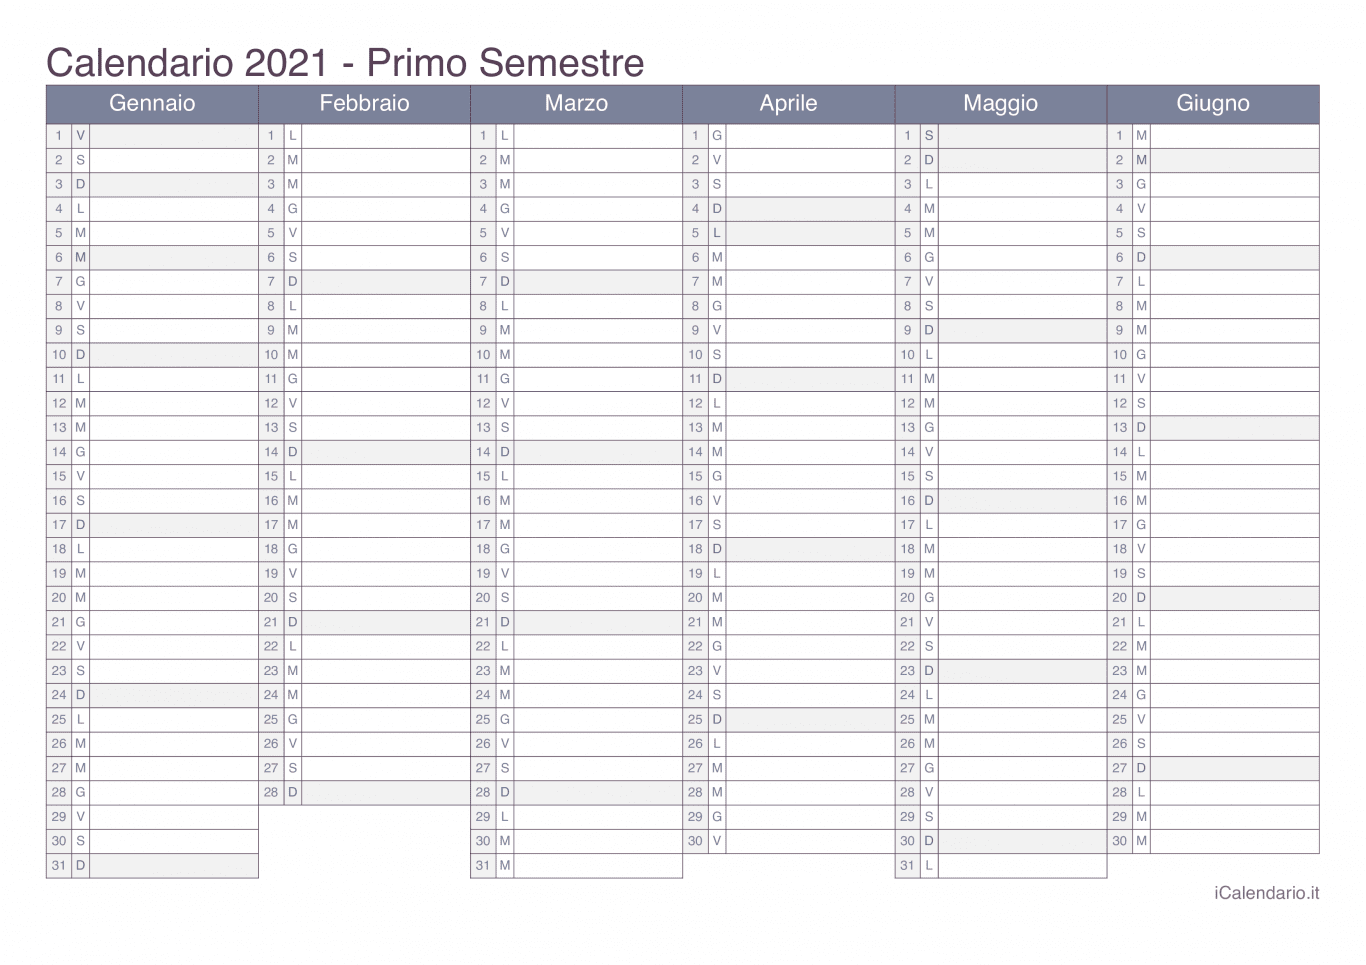 Calendario semestrale 2021 - Office